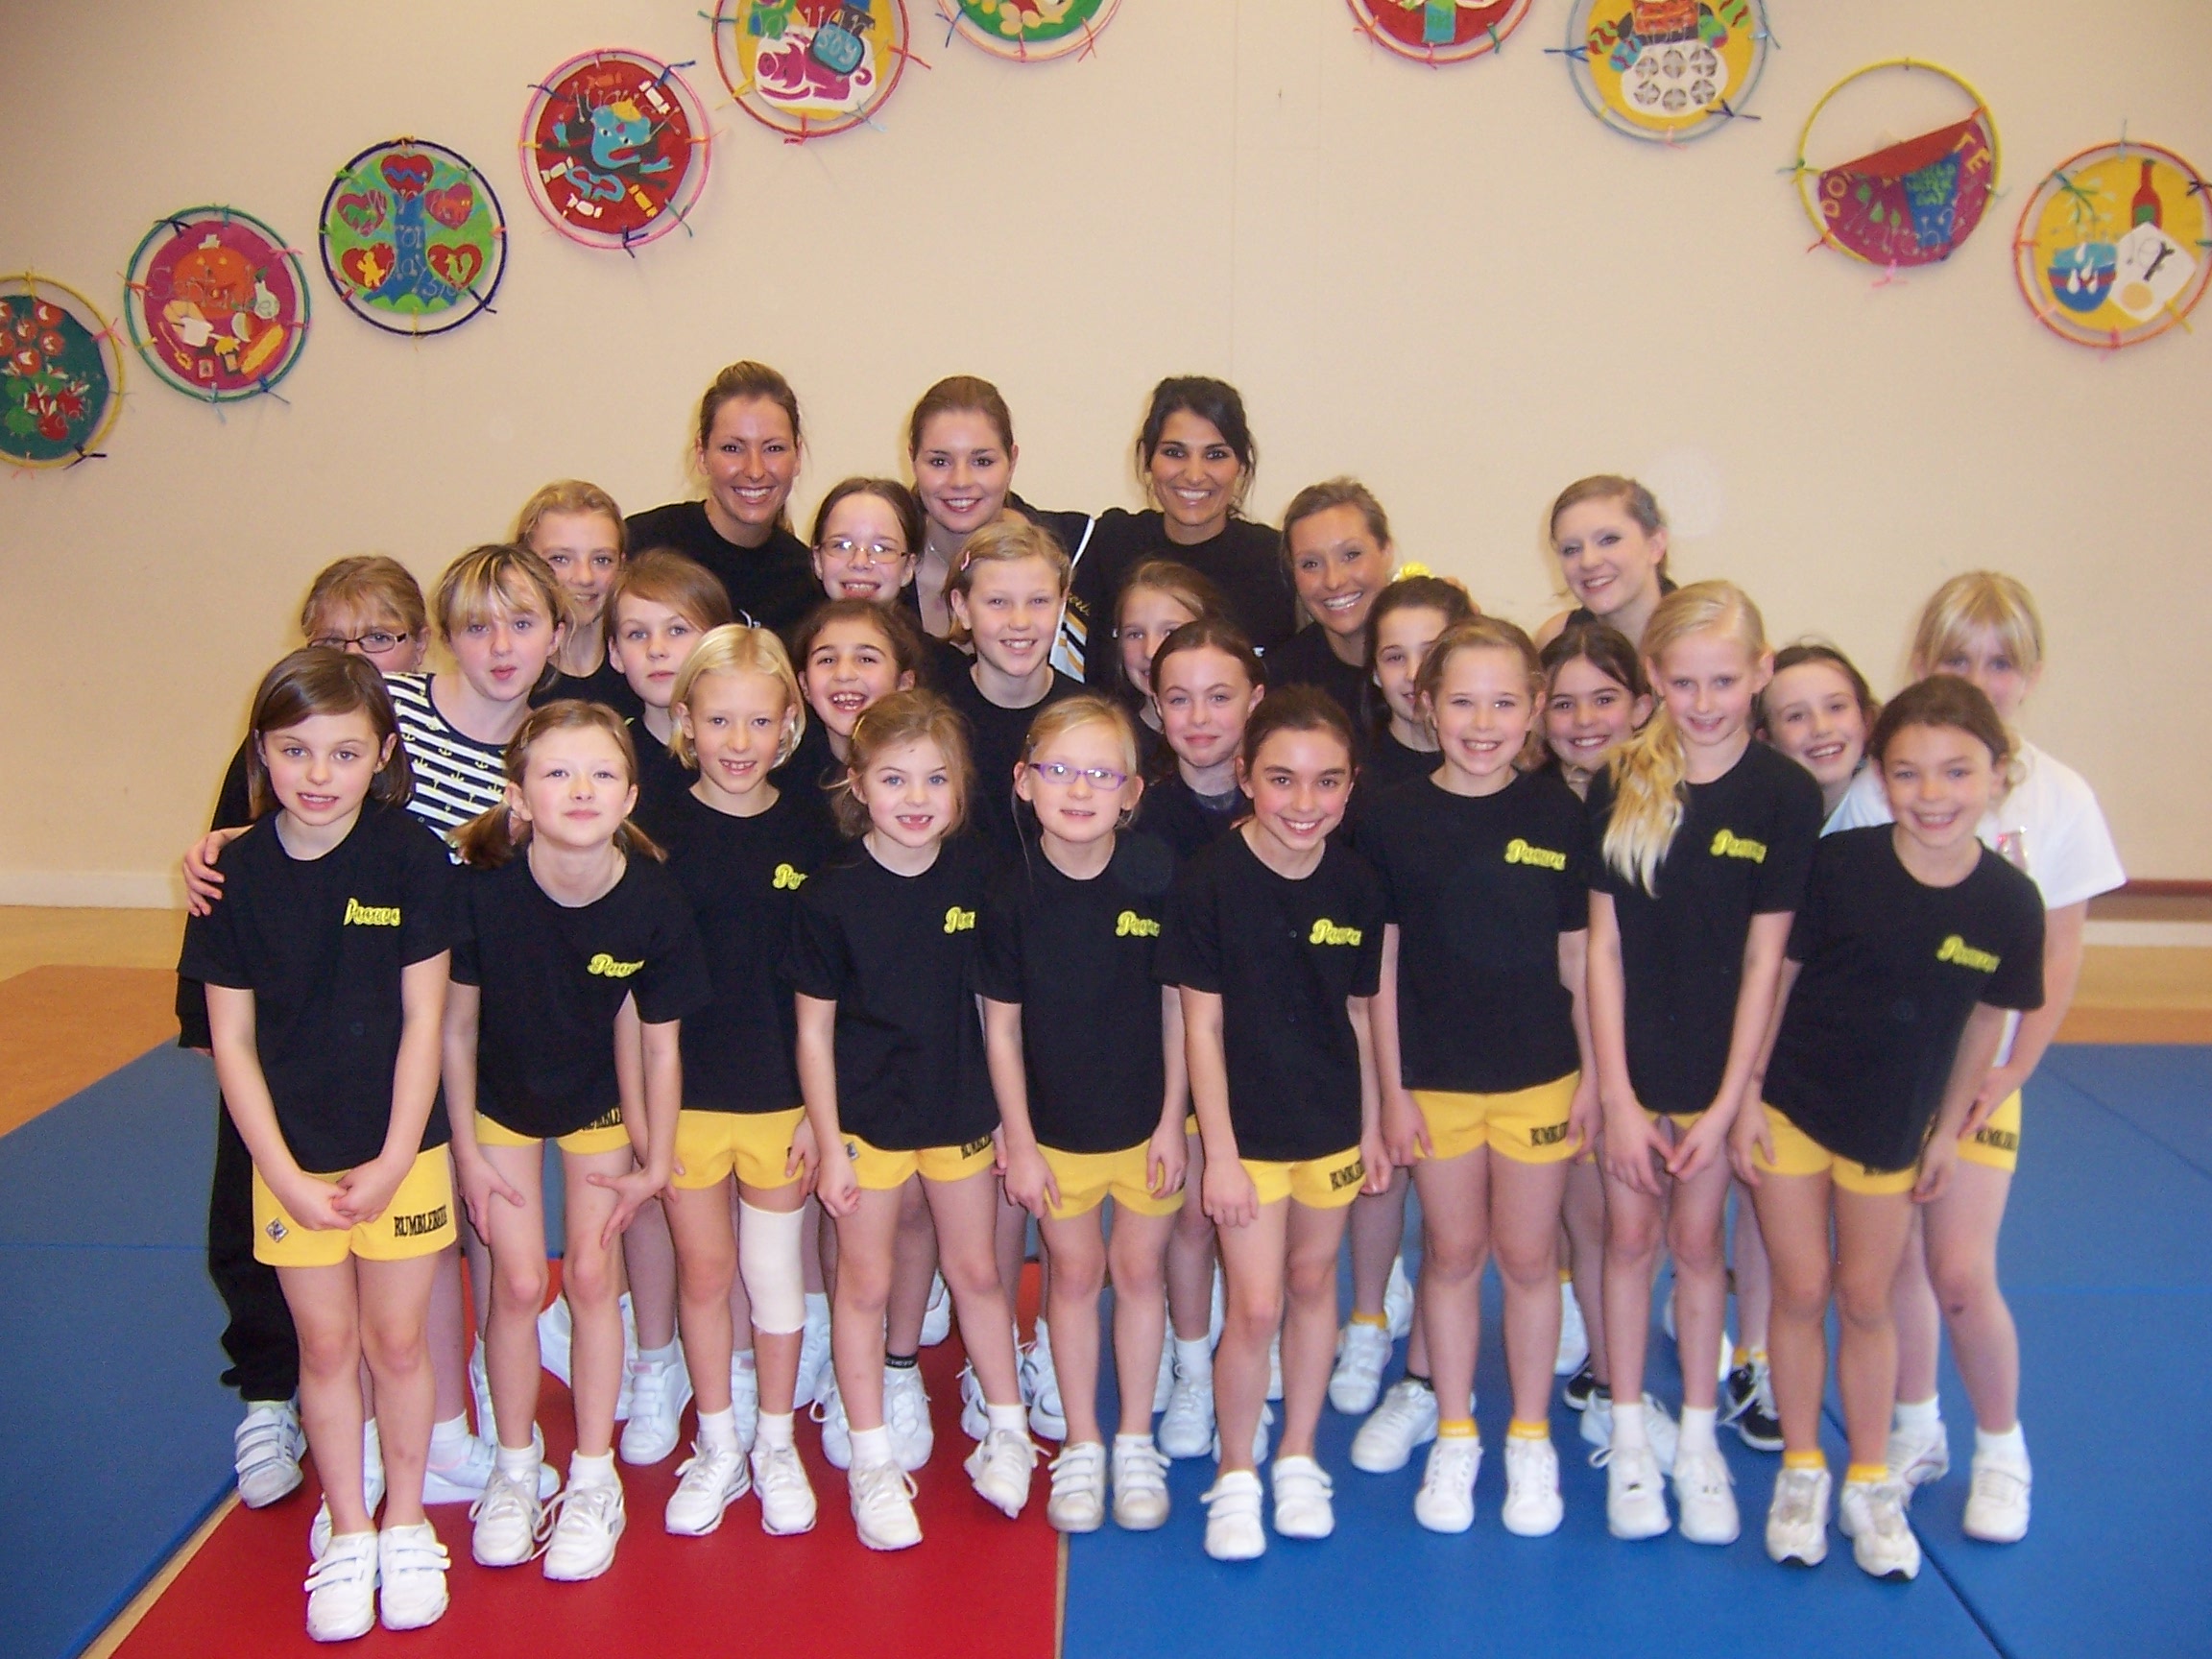 DanceCheerMove Spreads Inspiration Through International Cheerleading Camps